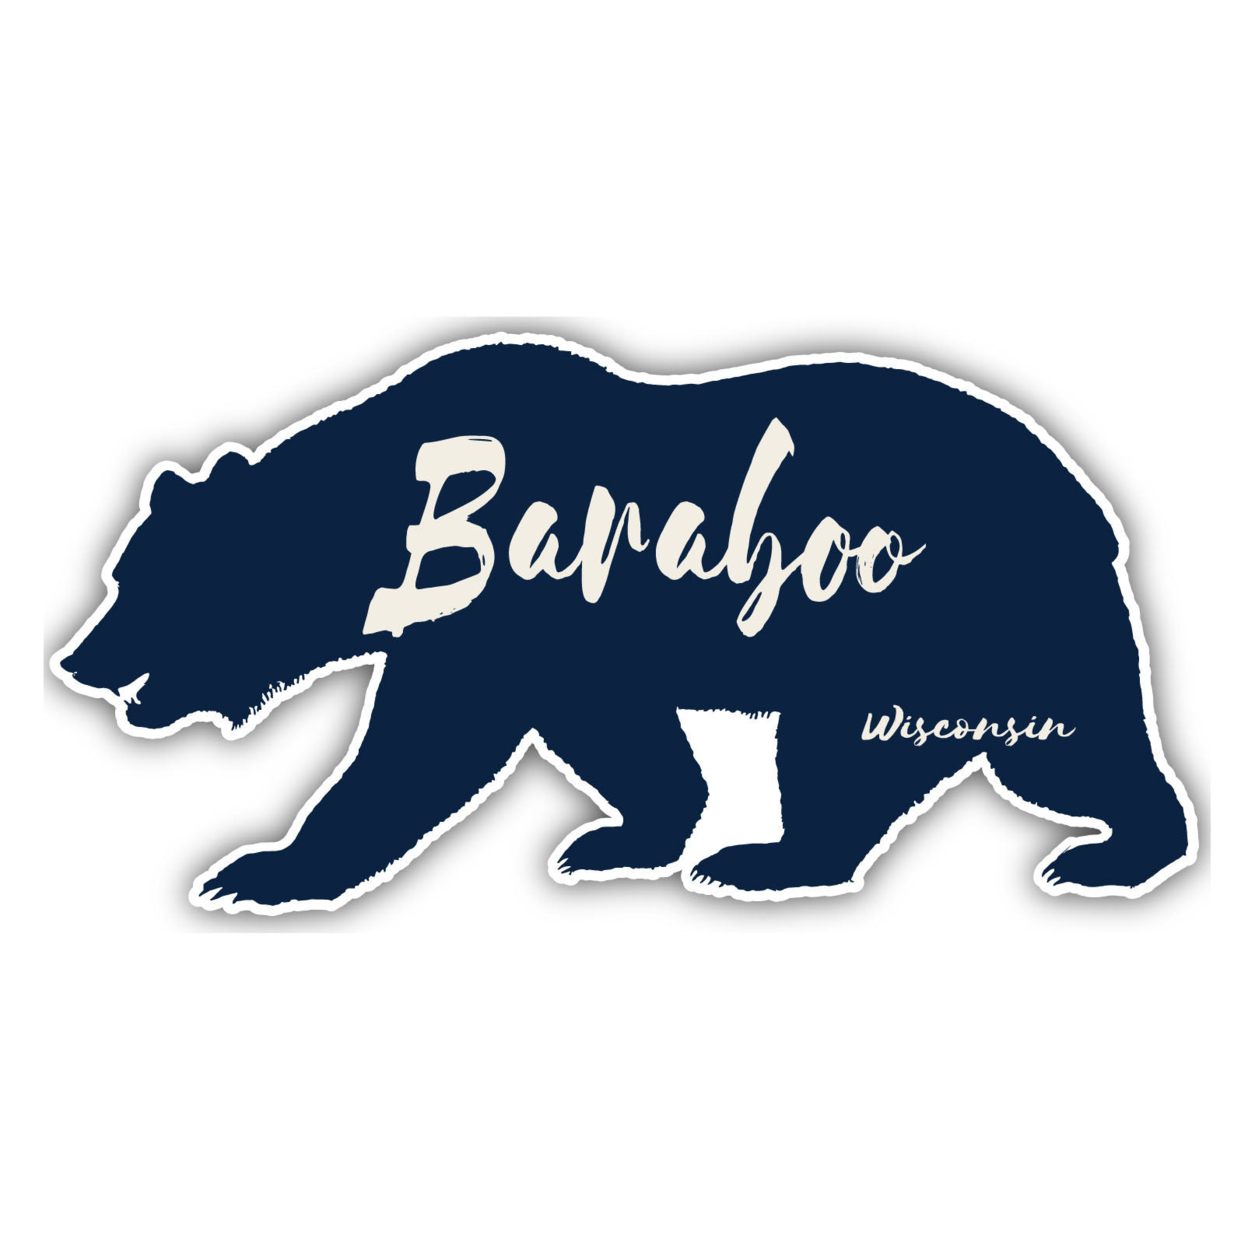 Baraboo Wisconsin Souvenir Decorative Stickers (Choose Theme And Size) - Single Unit, 8-Inch, Bear